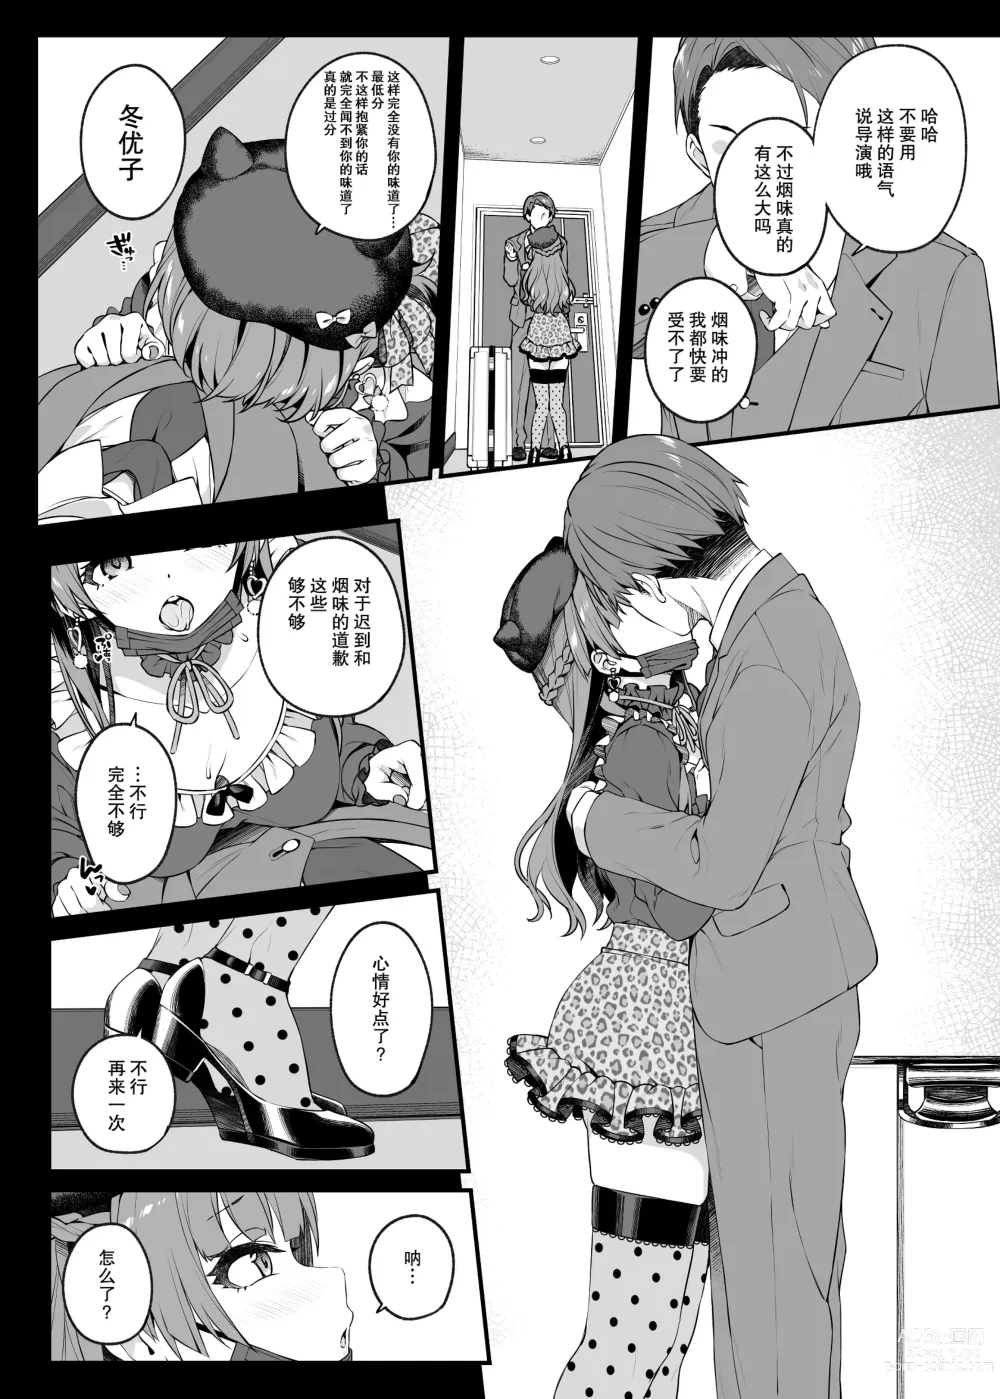 Page 7 of doujinshi 比看起来更会想的女人